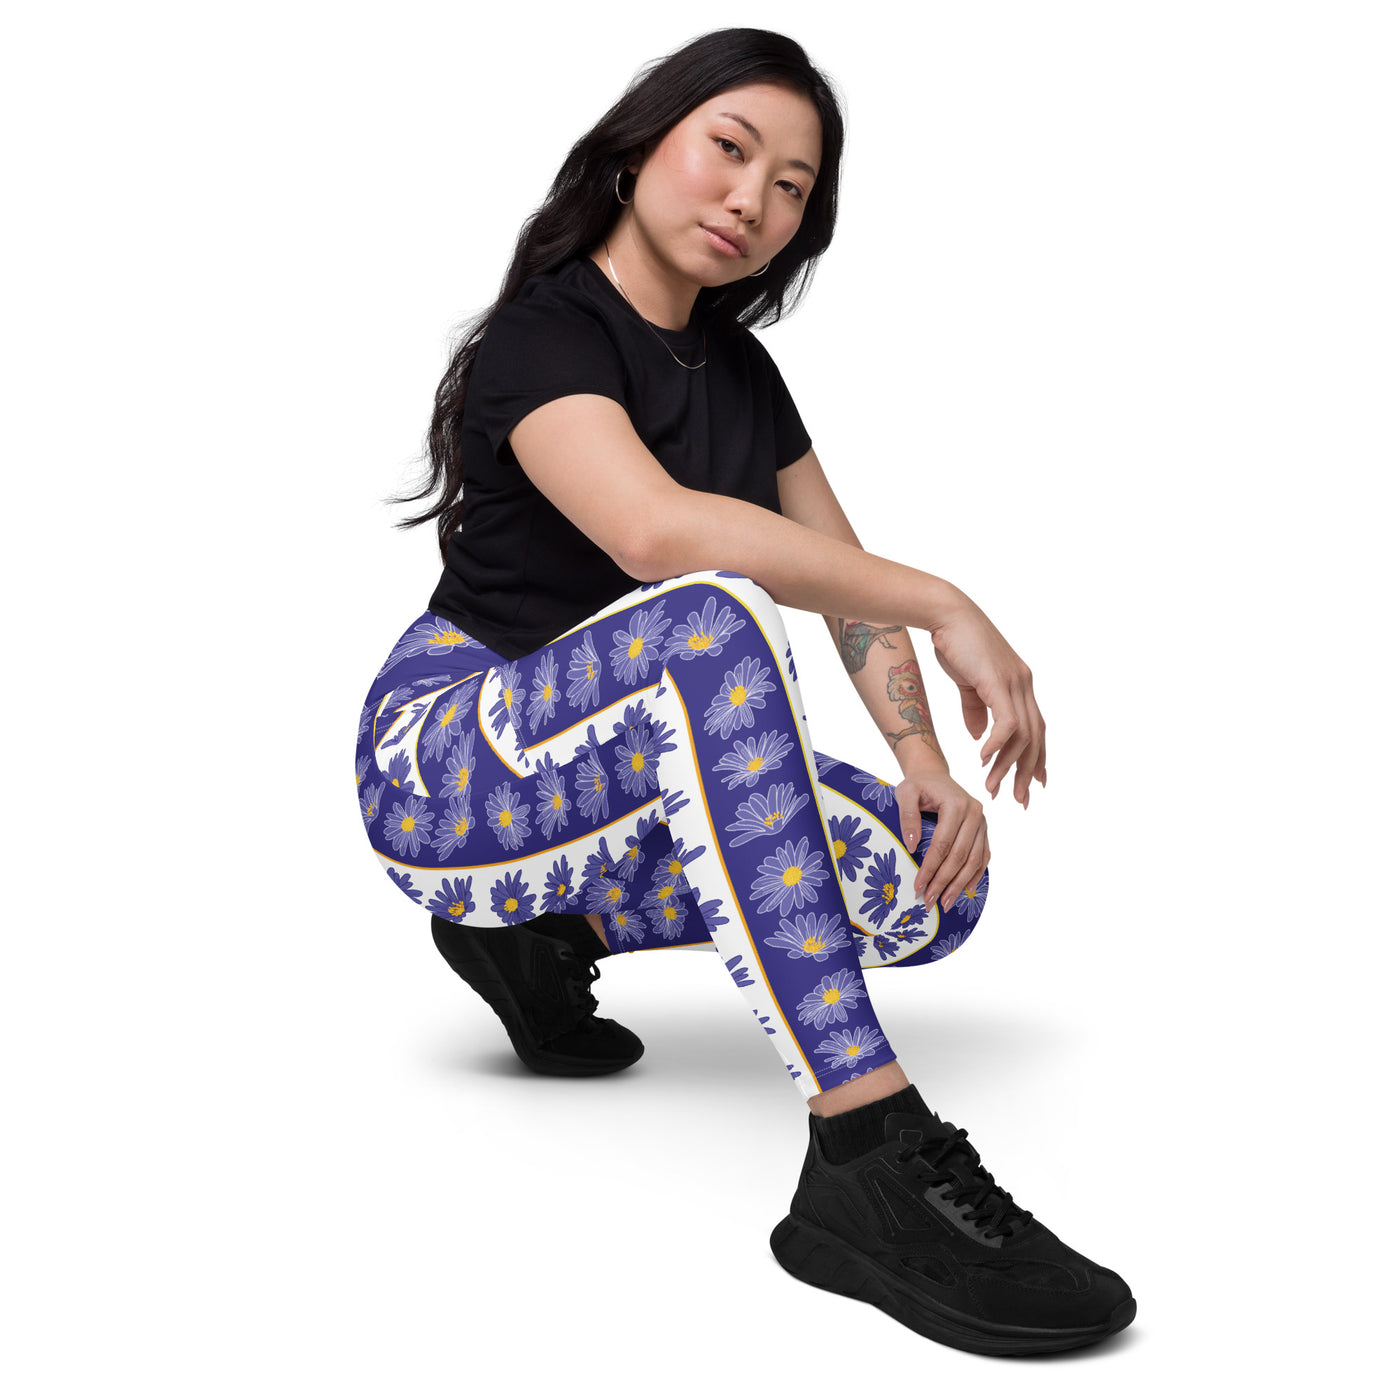 Jessie's Joy Leggings with Pockets: Stylish & Comfortable